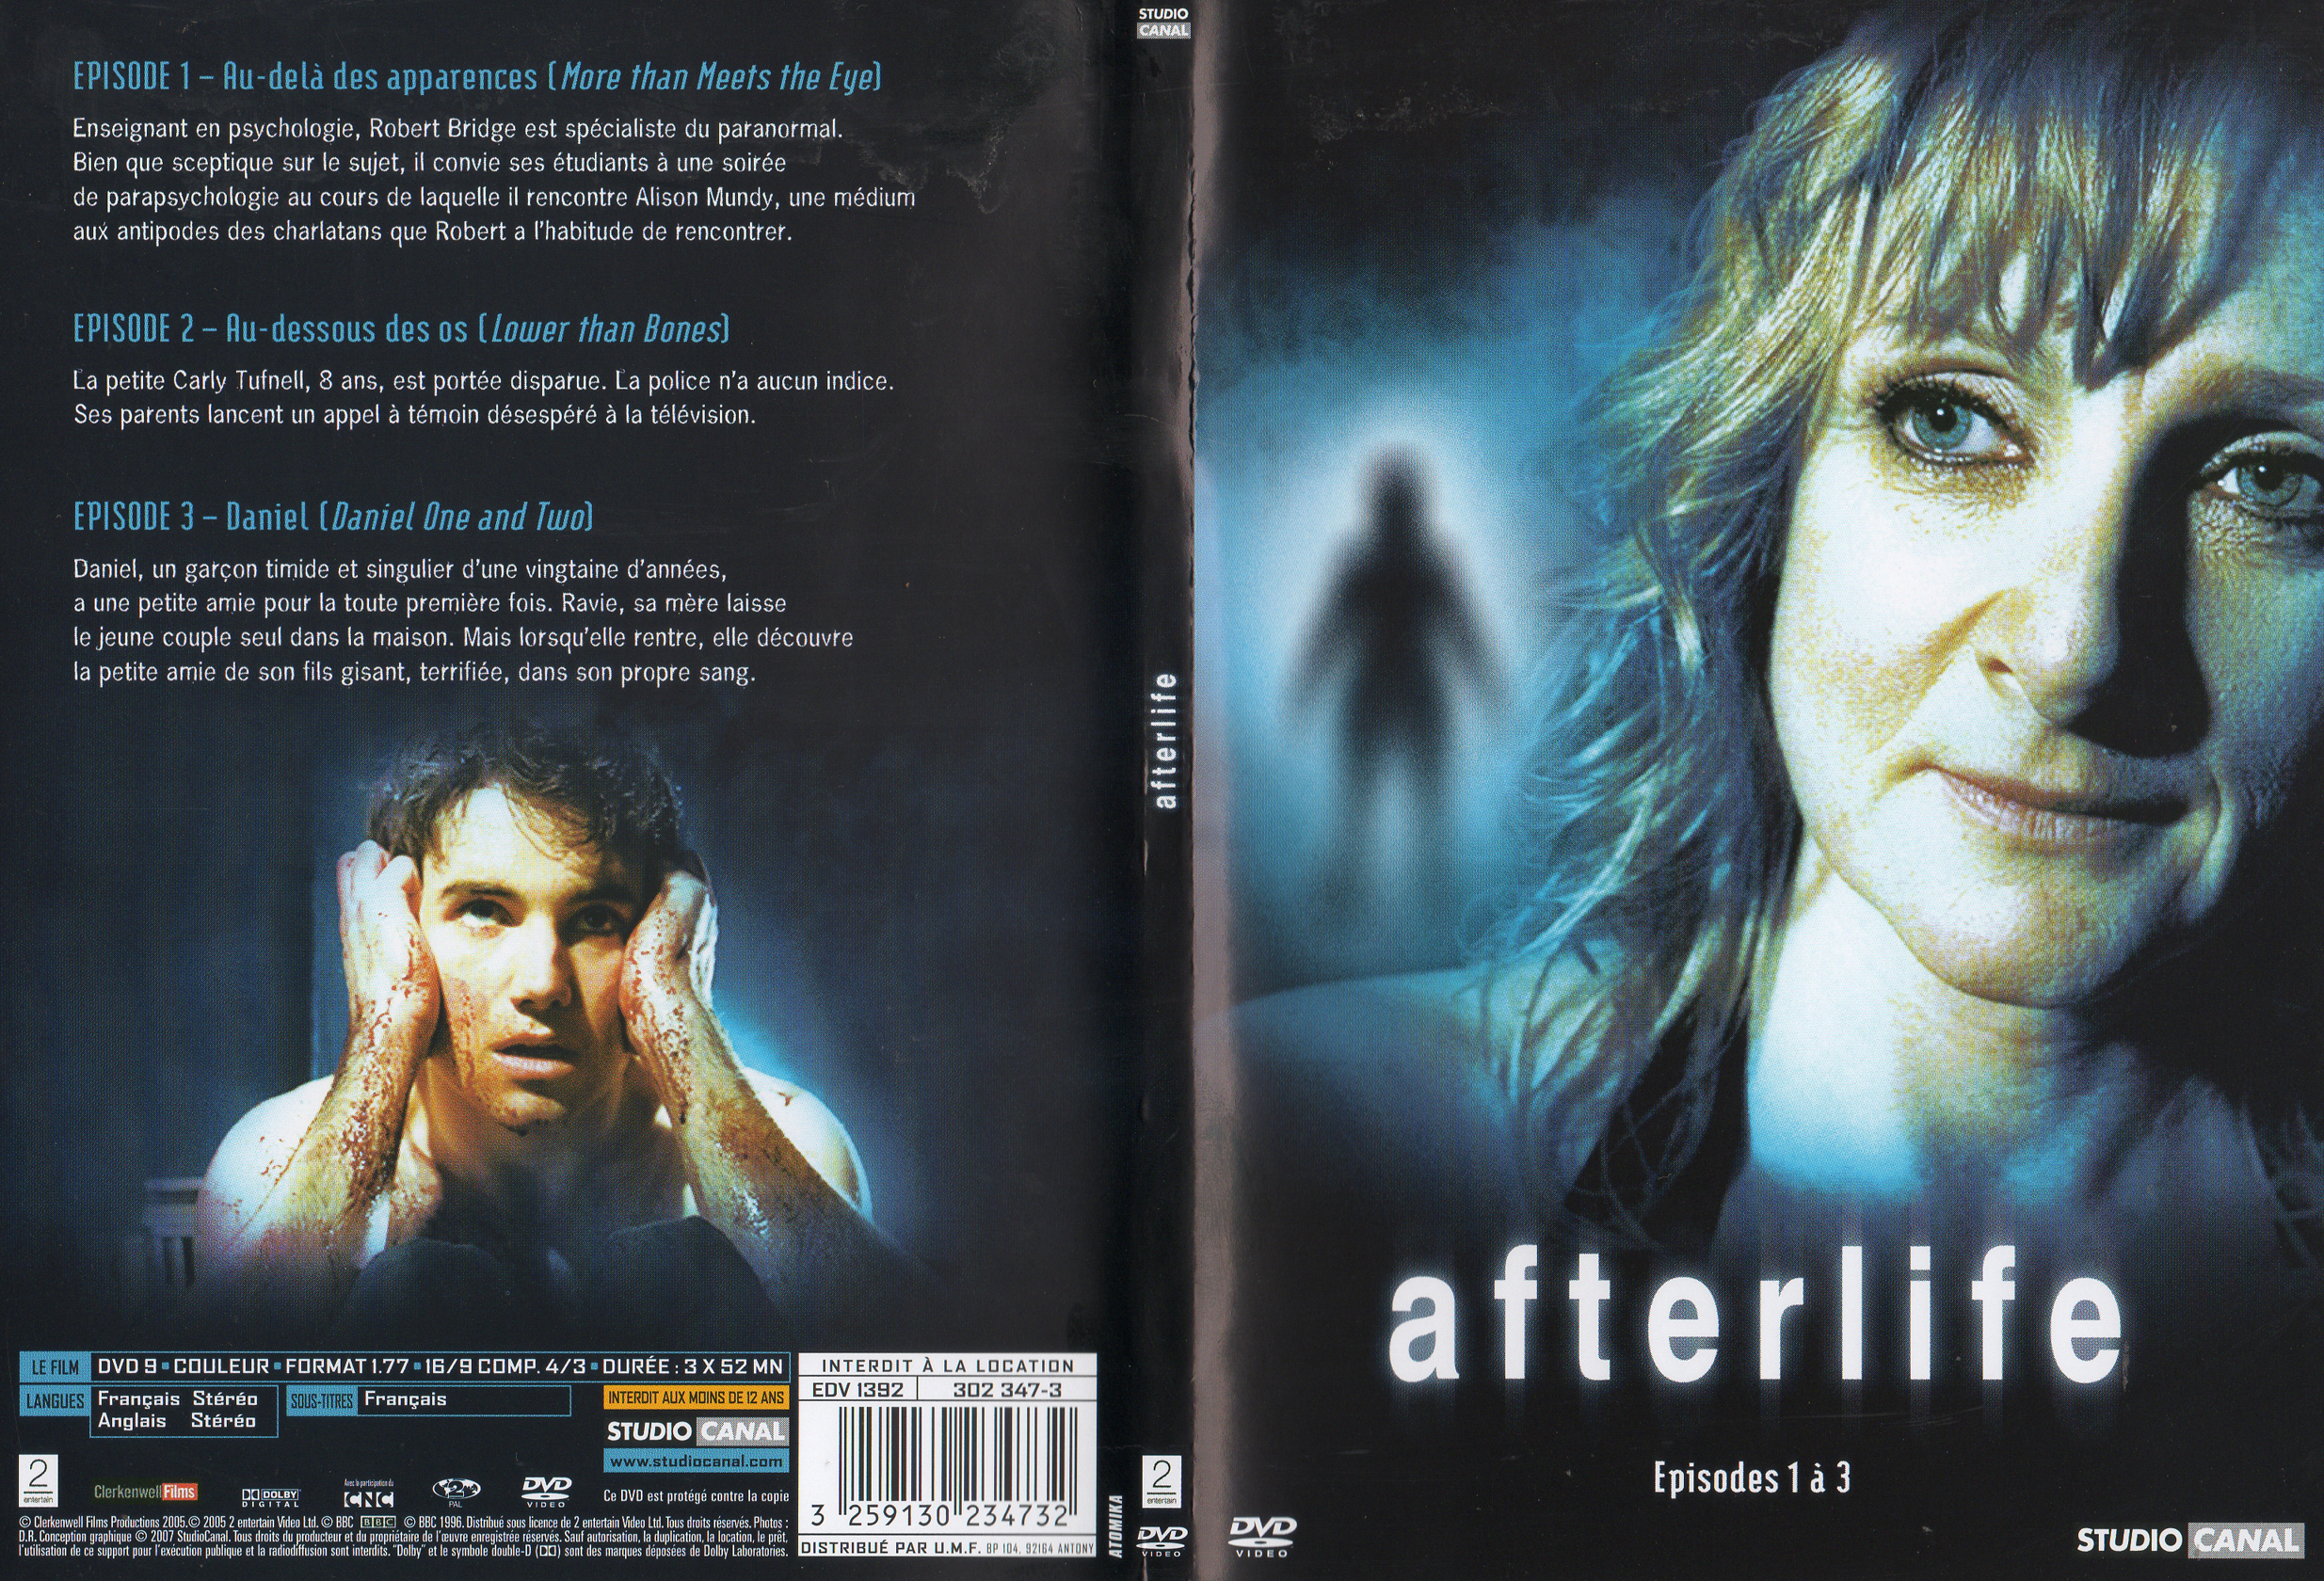 Jaquette DVD Afterlife Saison 1 DVD 1